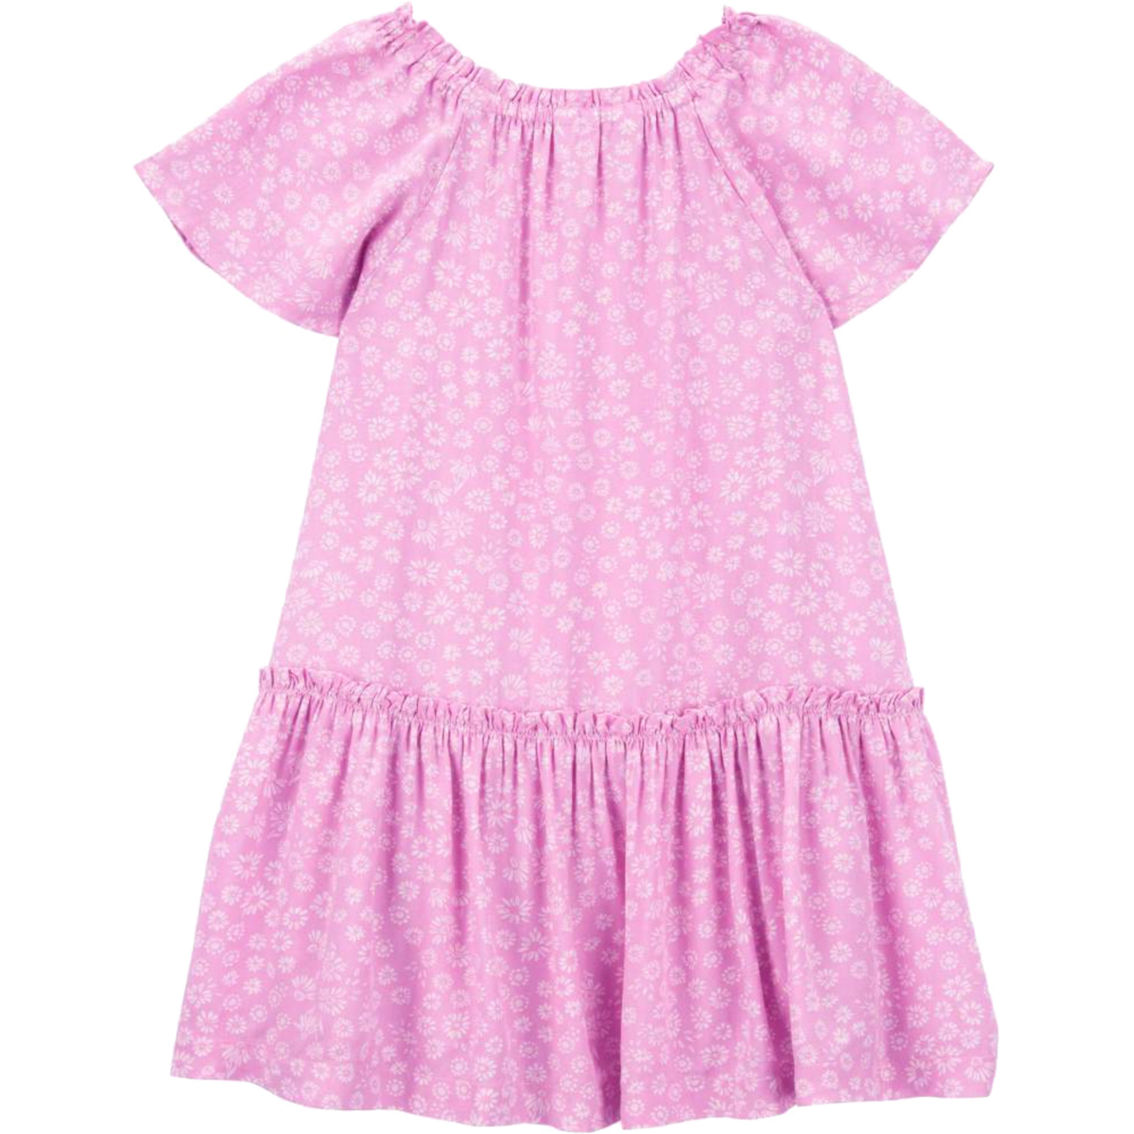 Carter's Toddler Girls Pink Floral Lenzing Ecovero Dress - Image 2 of 2